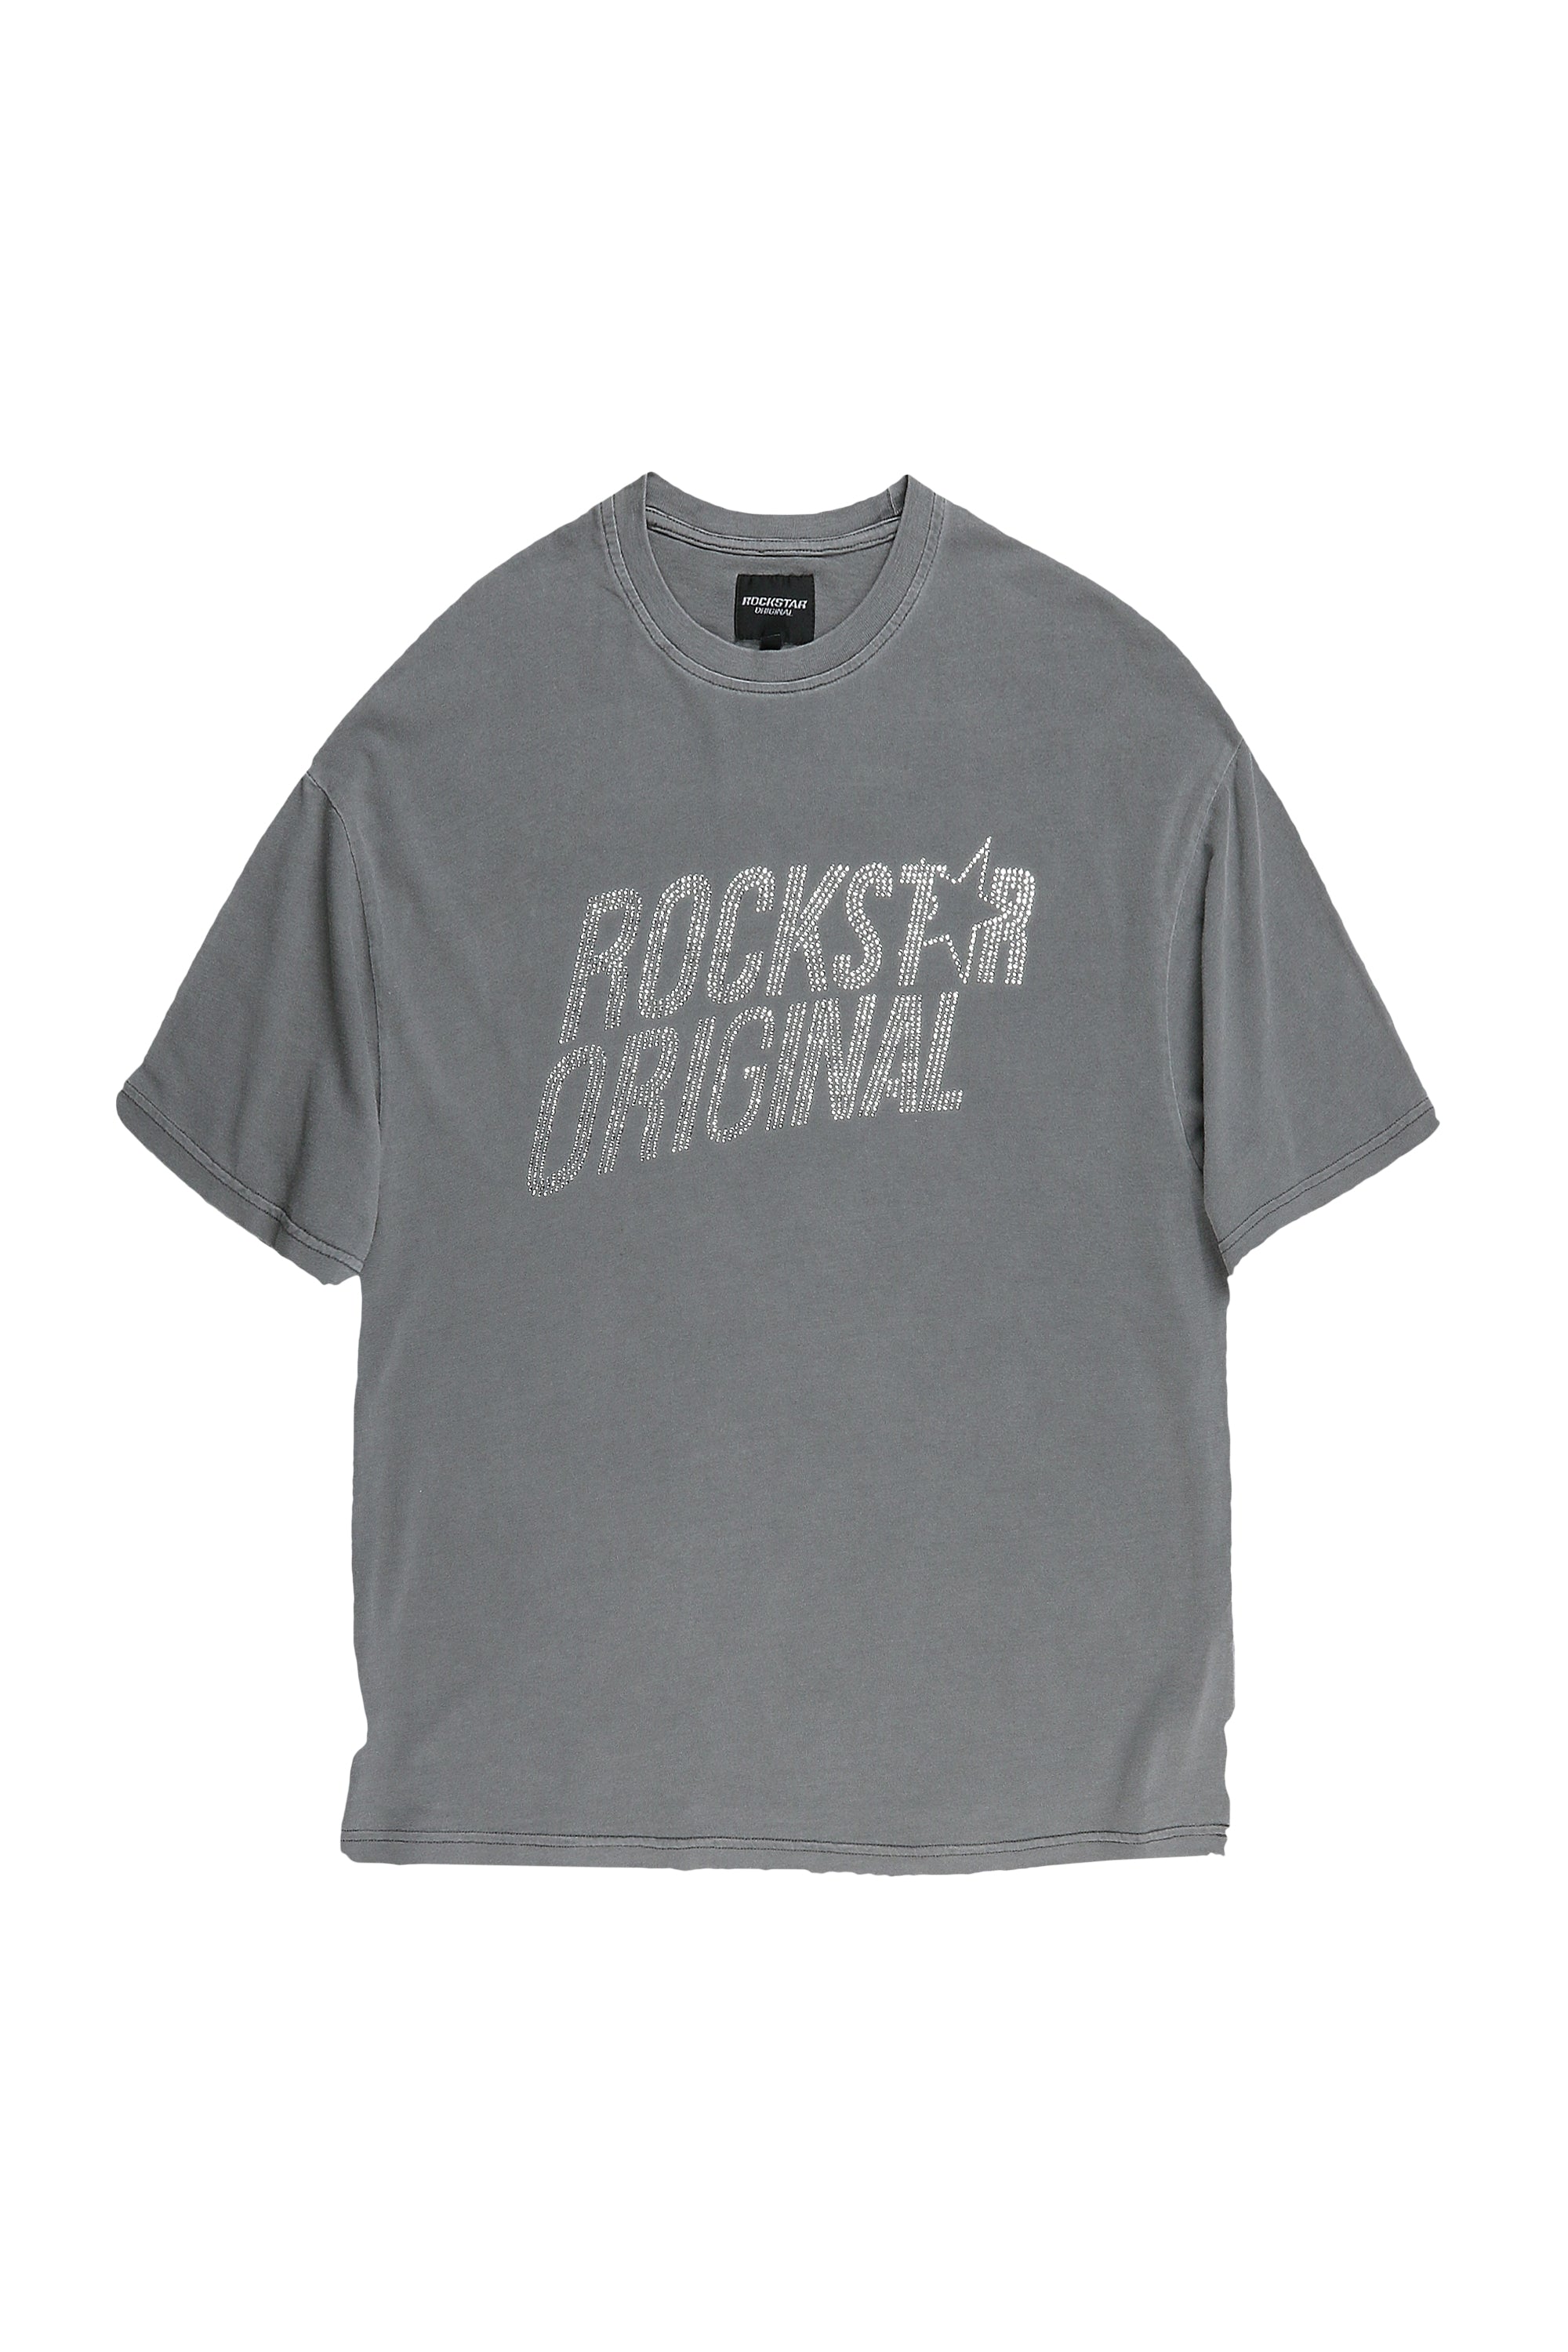 Travo Vintage Grey Oversized T-Shirt